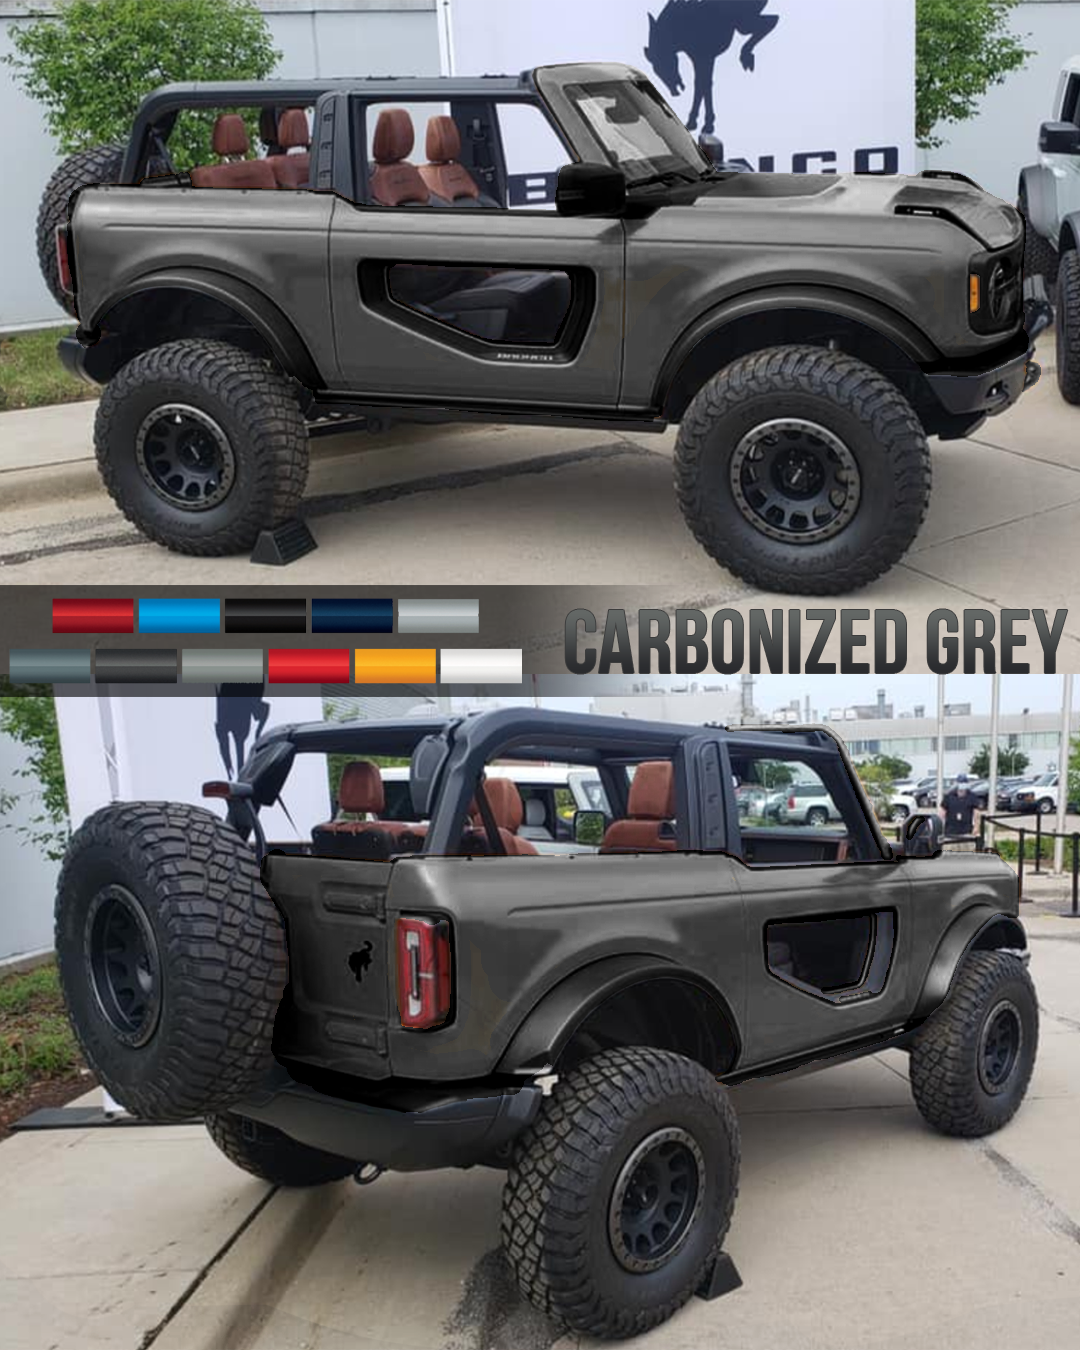 Ford Bronco 2021 Ford Bronco Actual Color Renderings Bronco Carbonized Grey